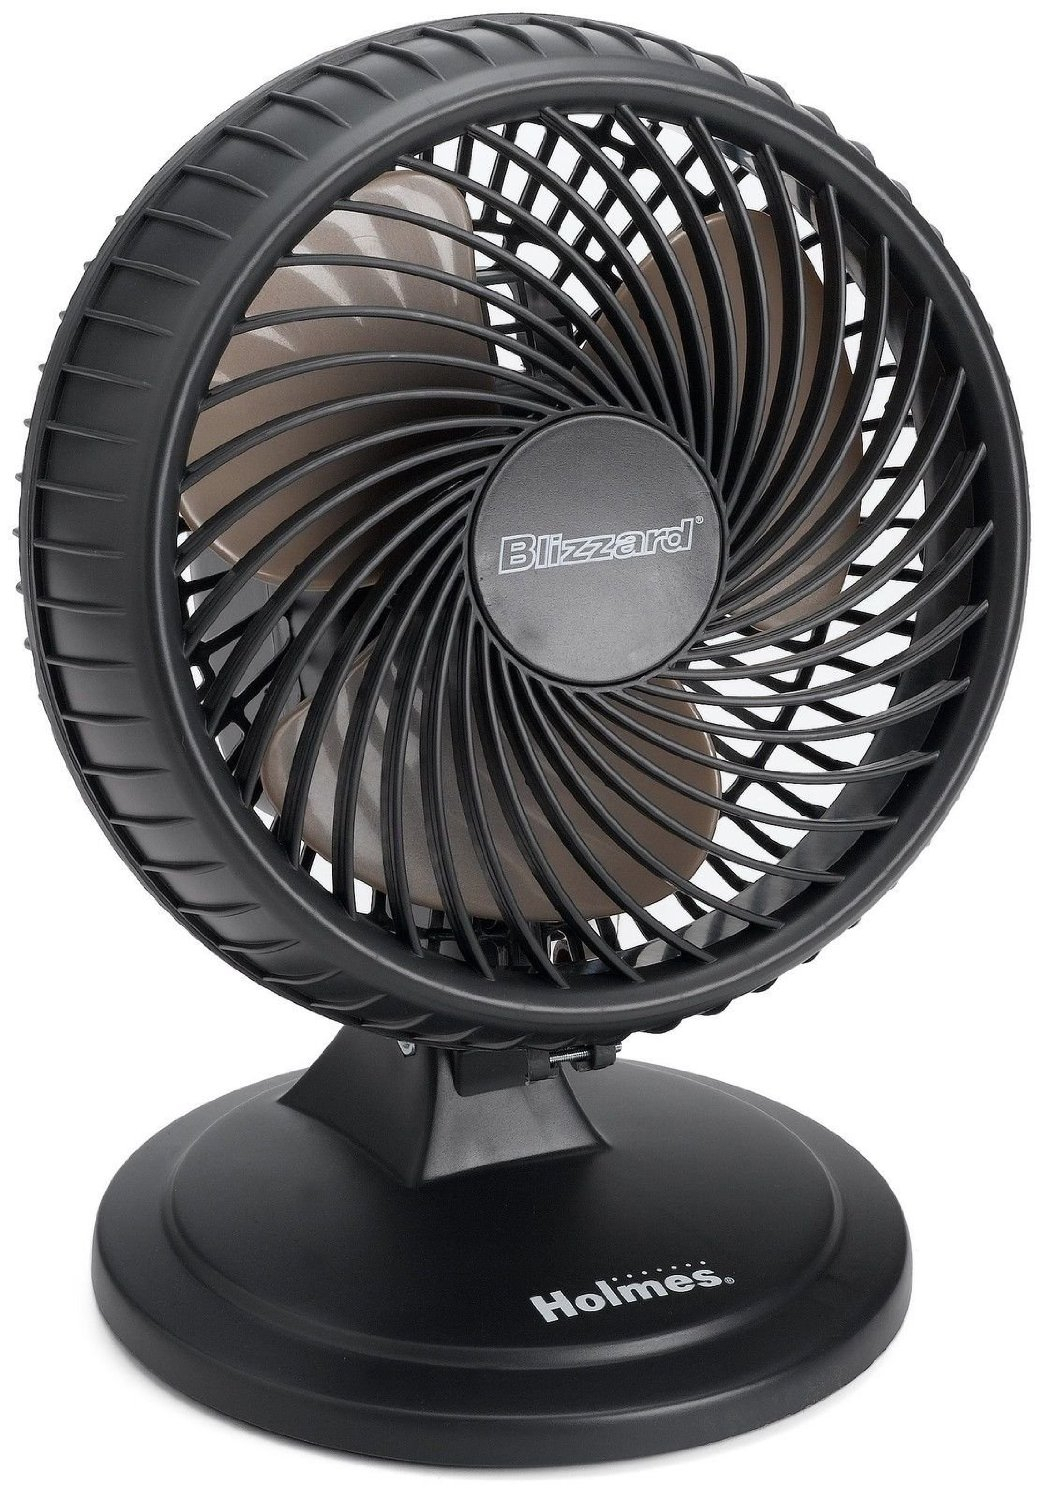 Buy Holmes Lil Blizzard 8-Inch Oscillating Table Fan à Holmes Oscillating Fan